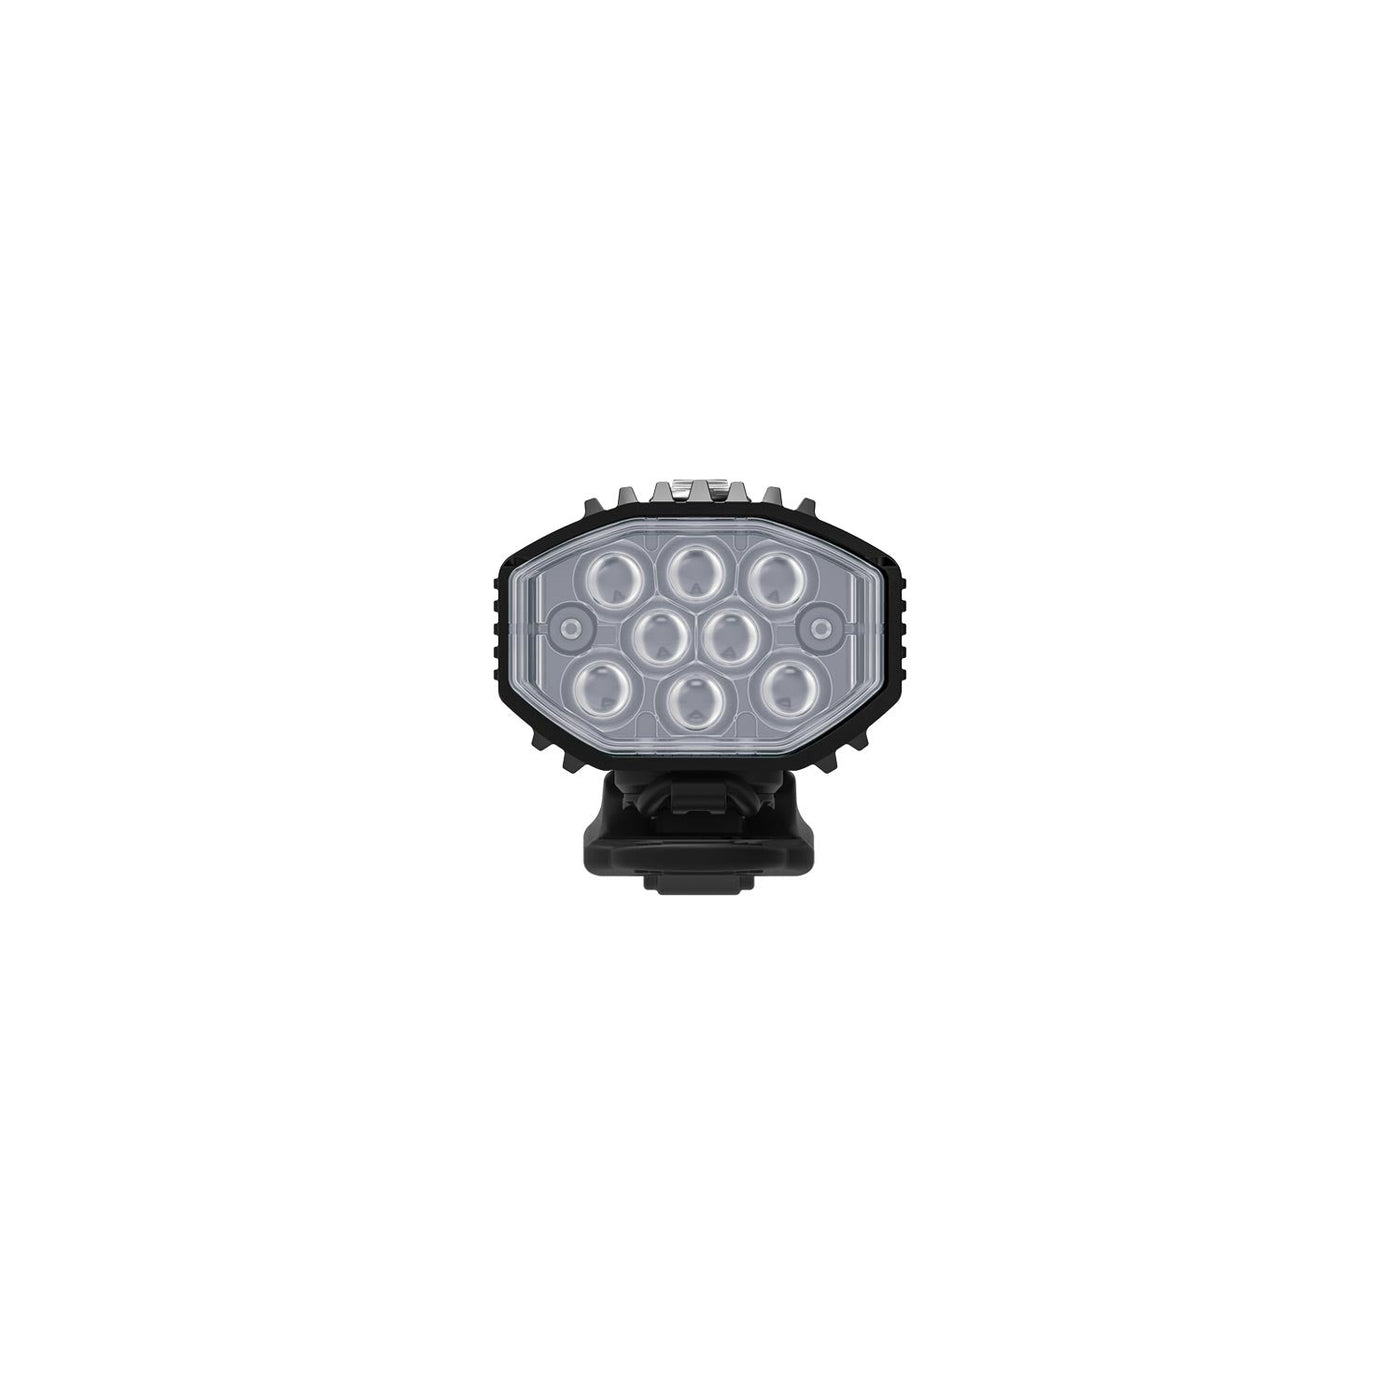 Lezyne Micro Drive 800+ /  KTV Drive Pro+ Cycle Light Set